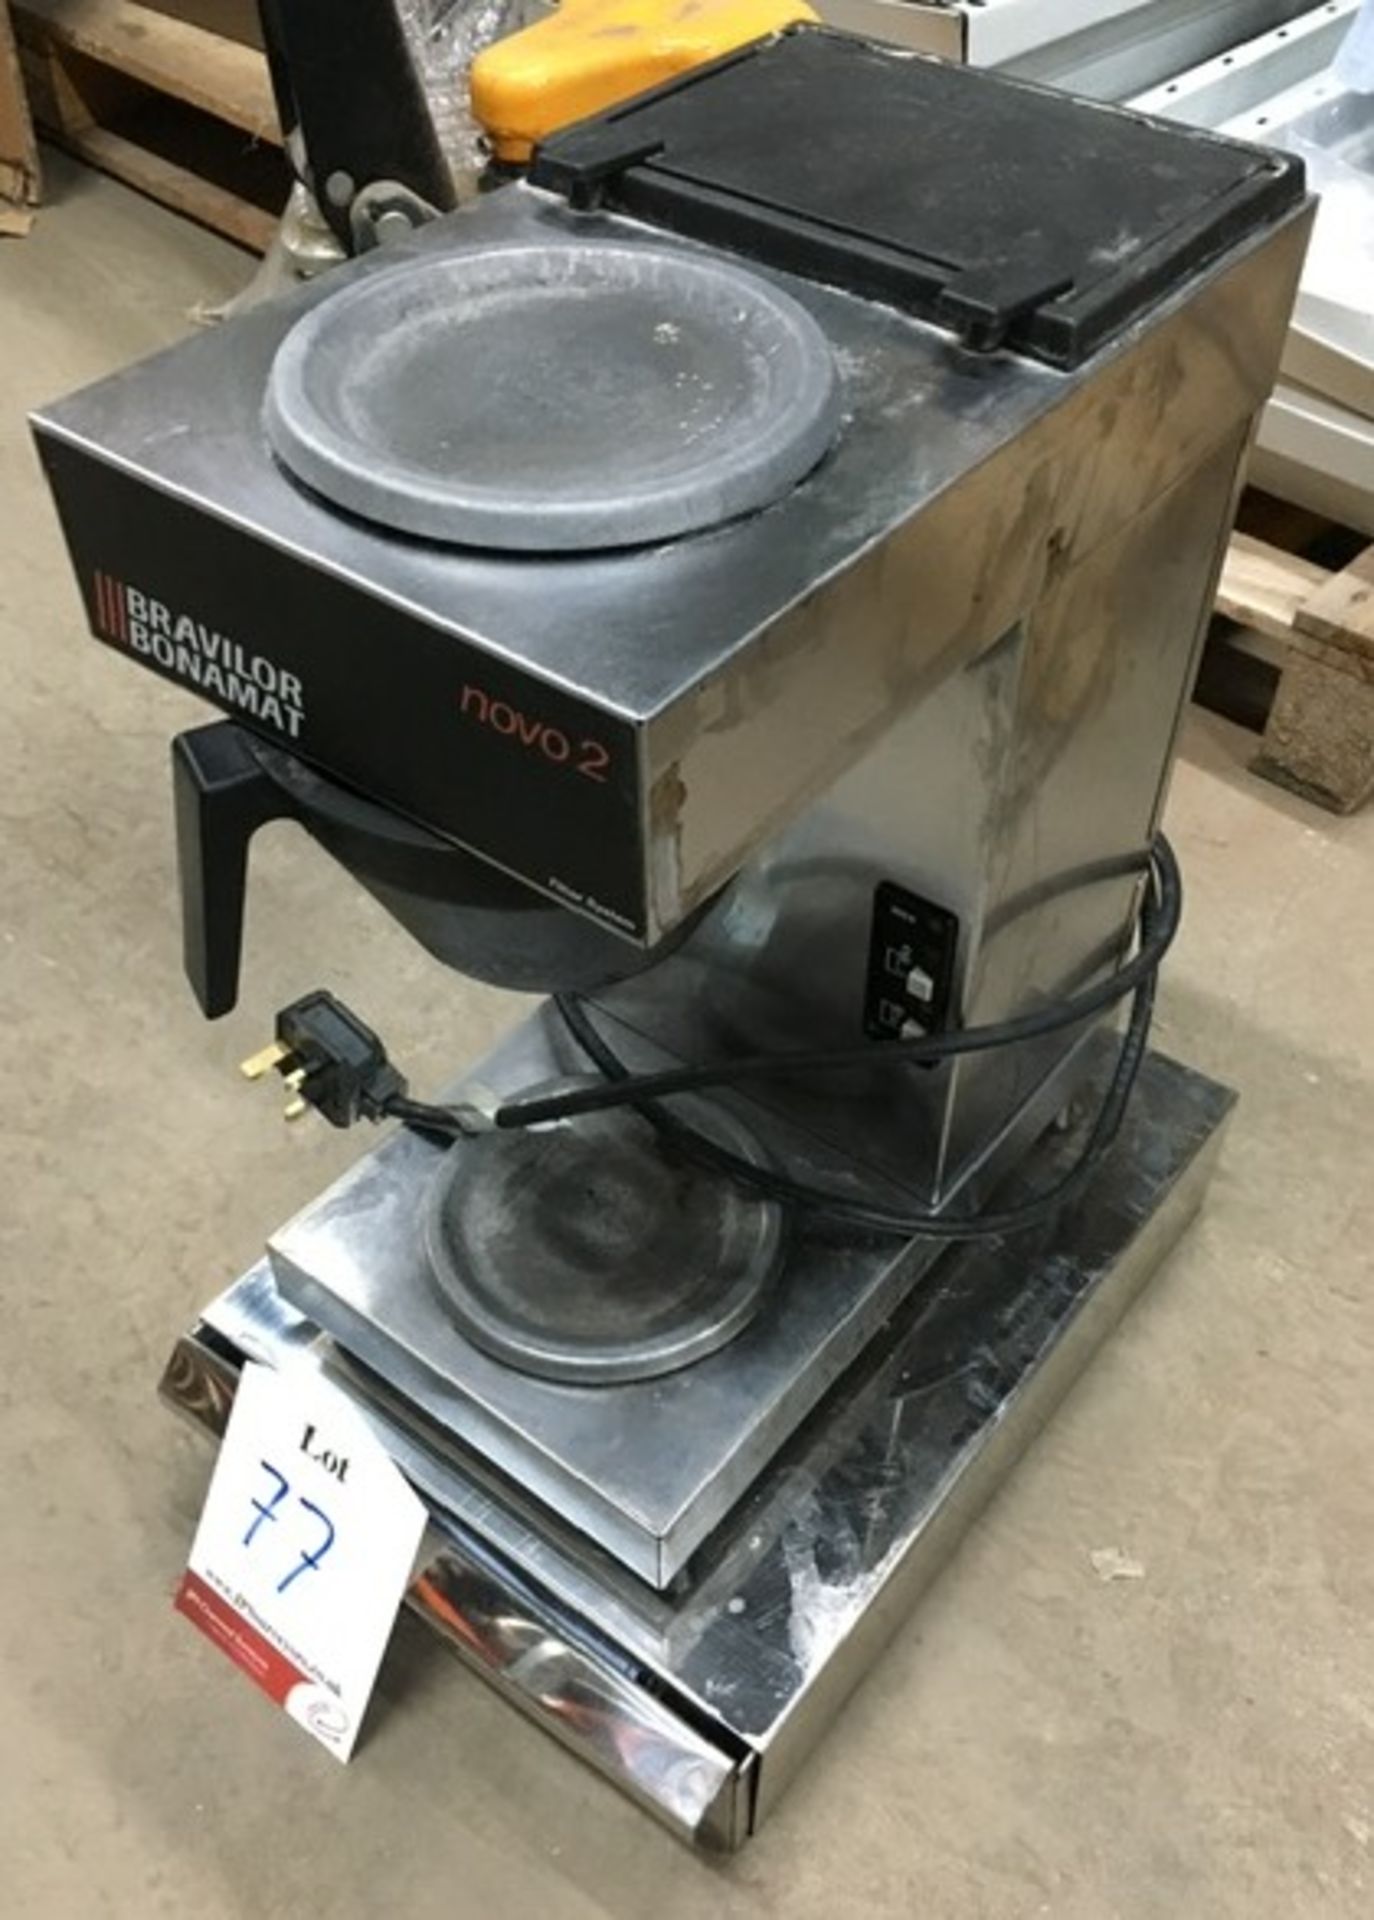 Bravilor Bonamat Novo 2 Coffee Machine - Image 2 of 3